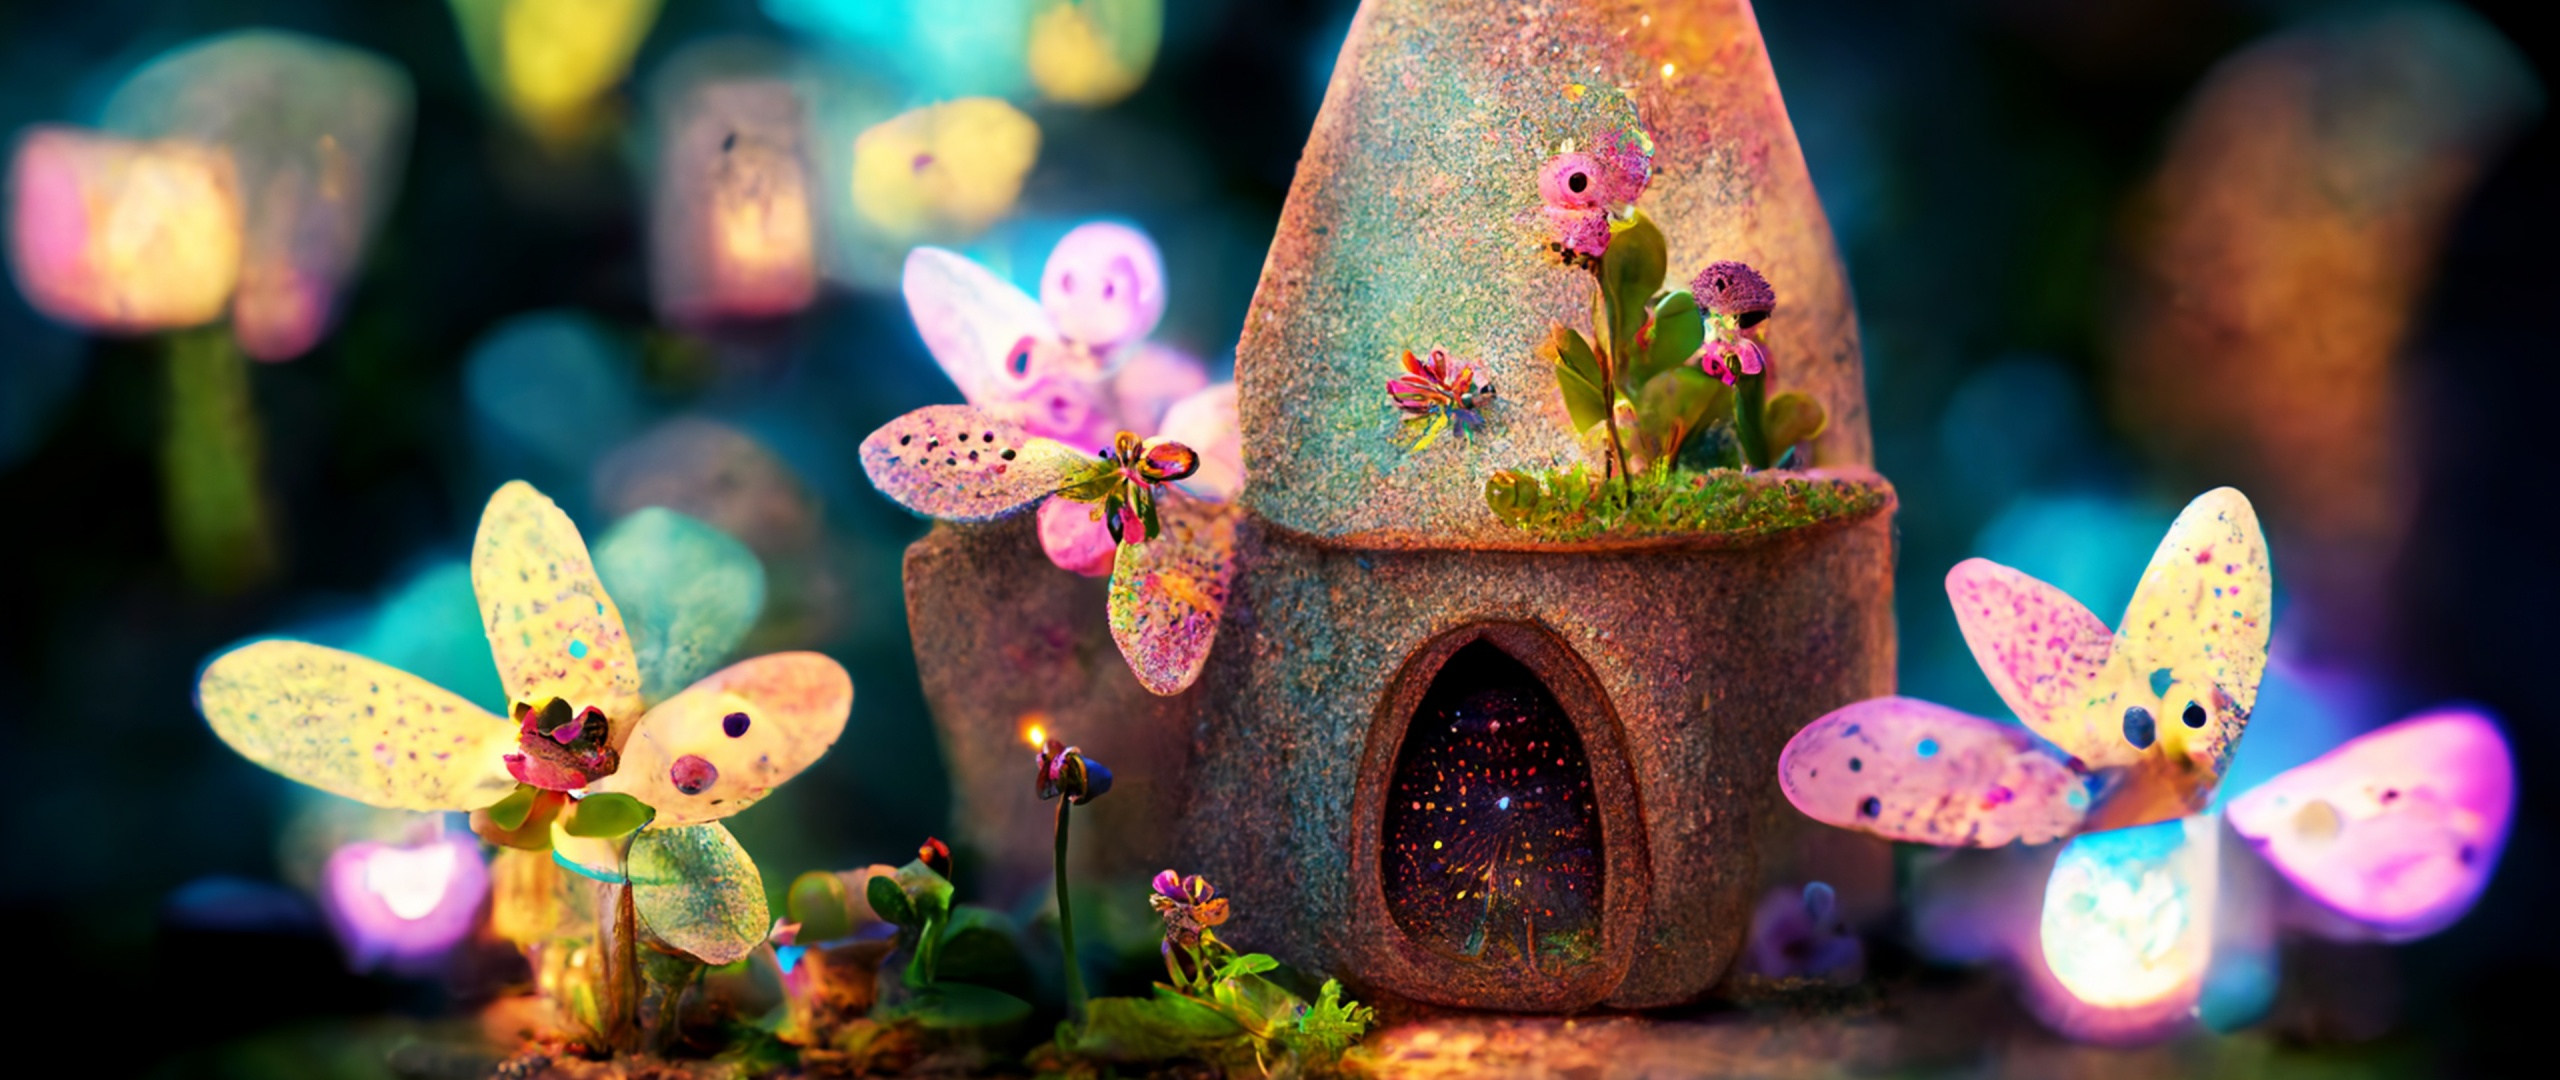 300 Free Garden Fairy  Nature Images  Pixabay